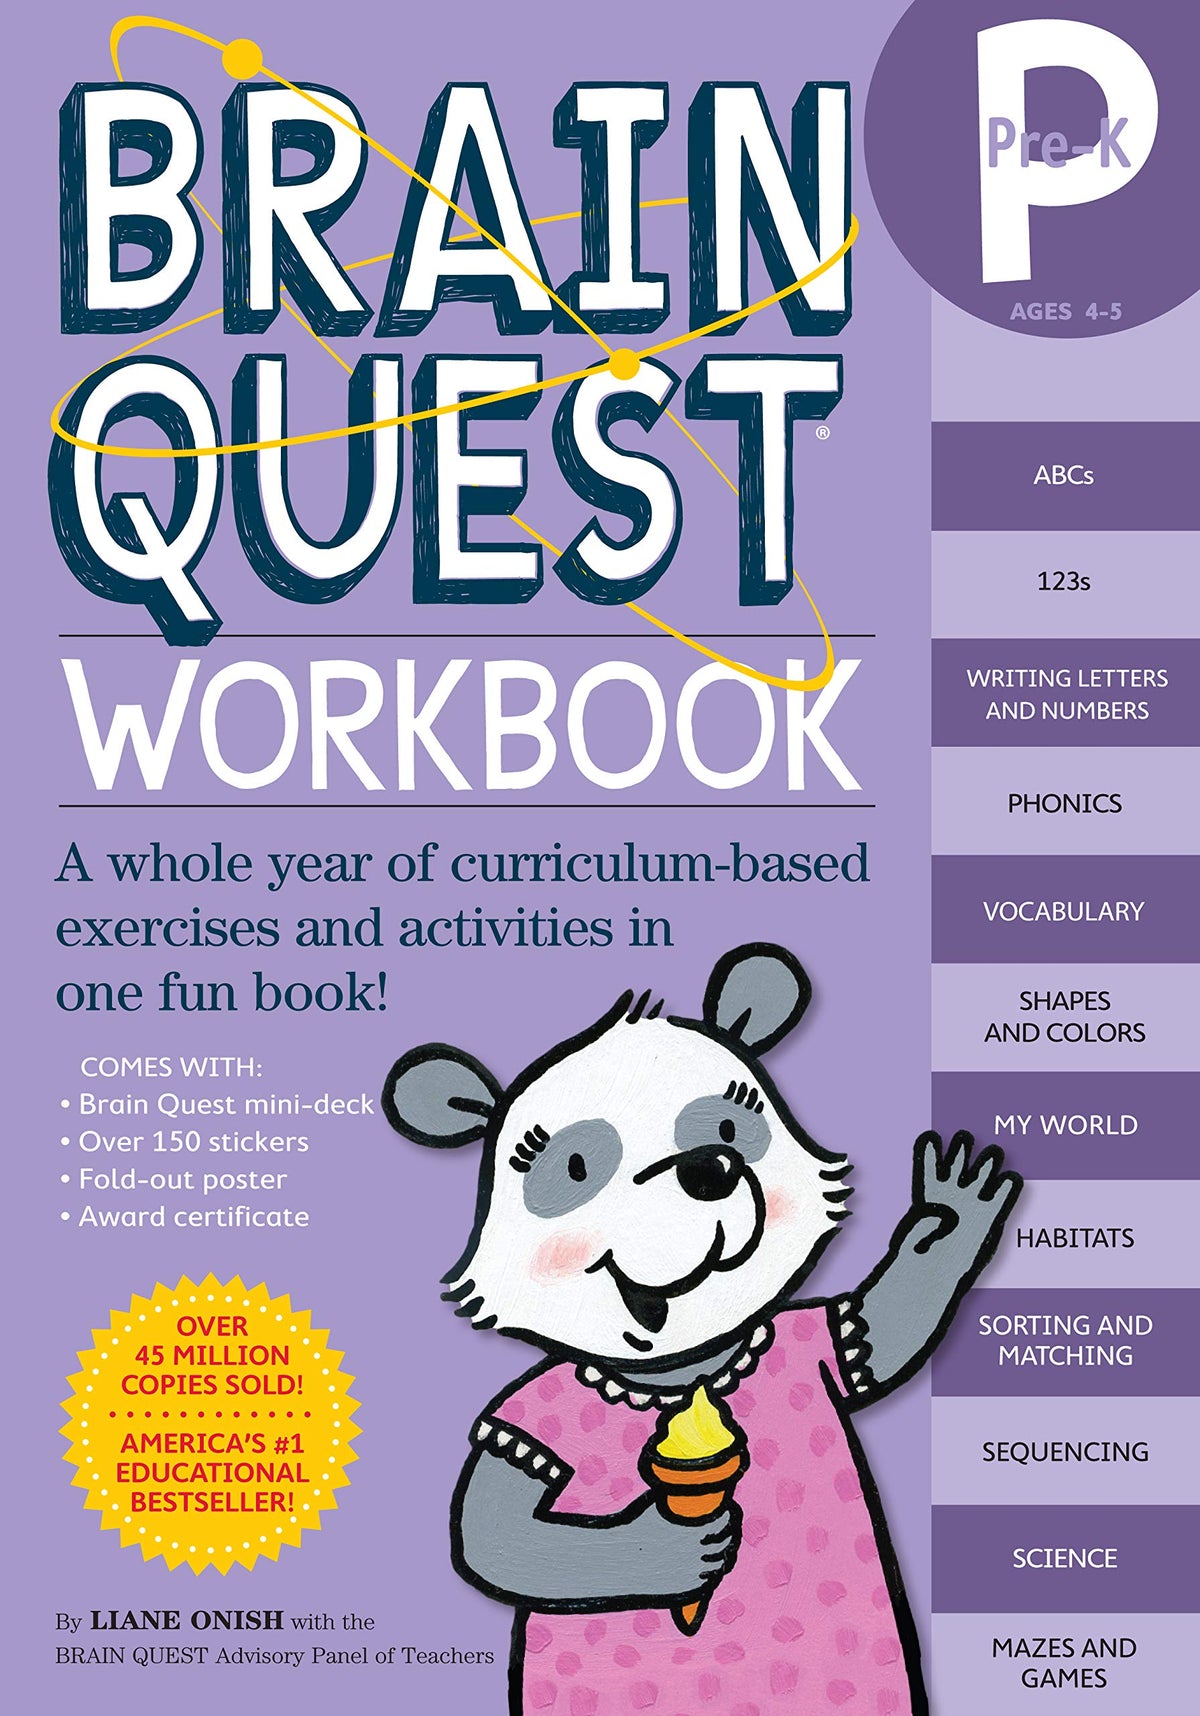 Brain Quest Workbooks: Pre K-4th Grade